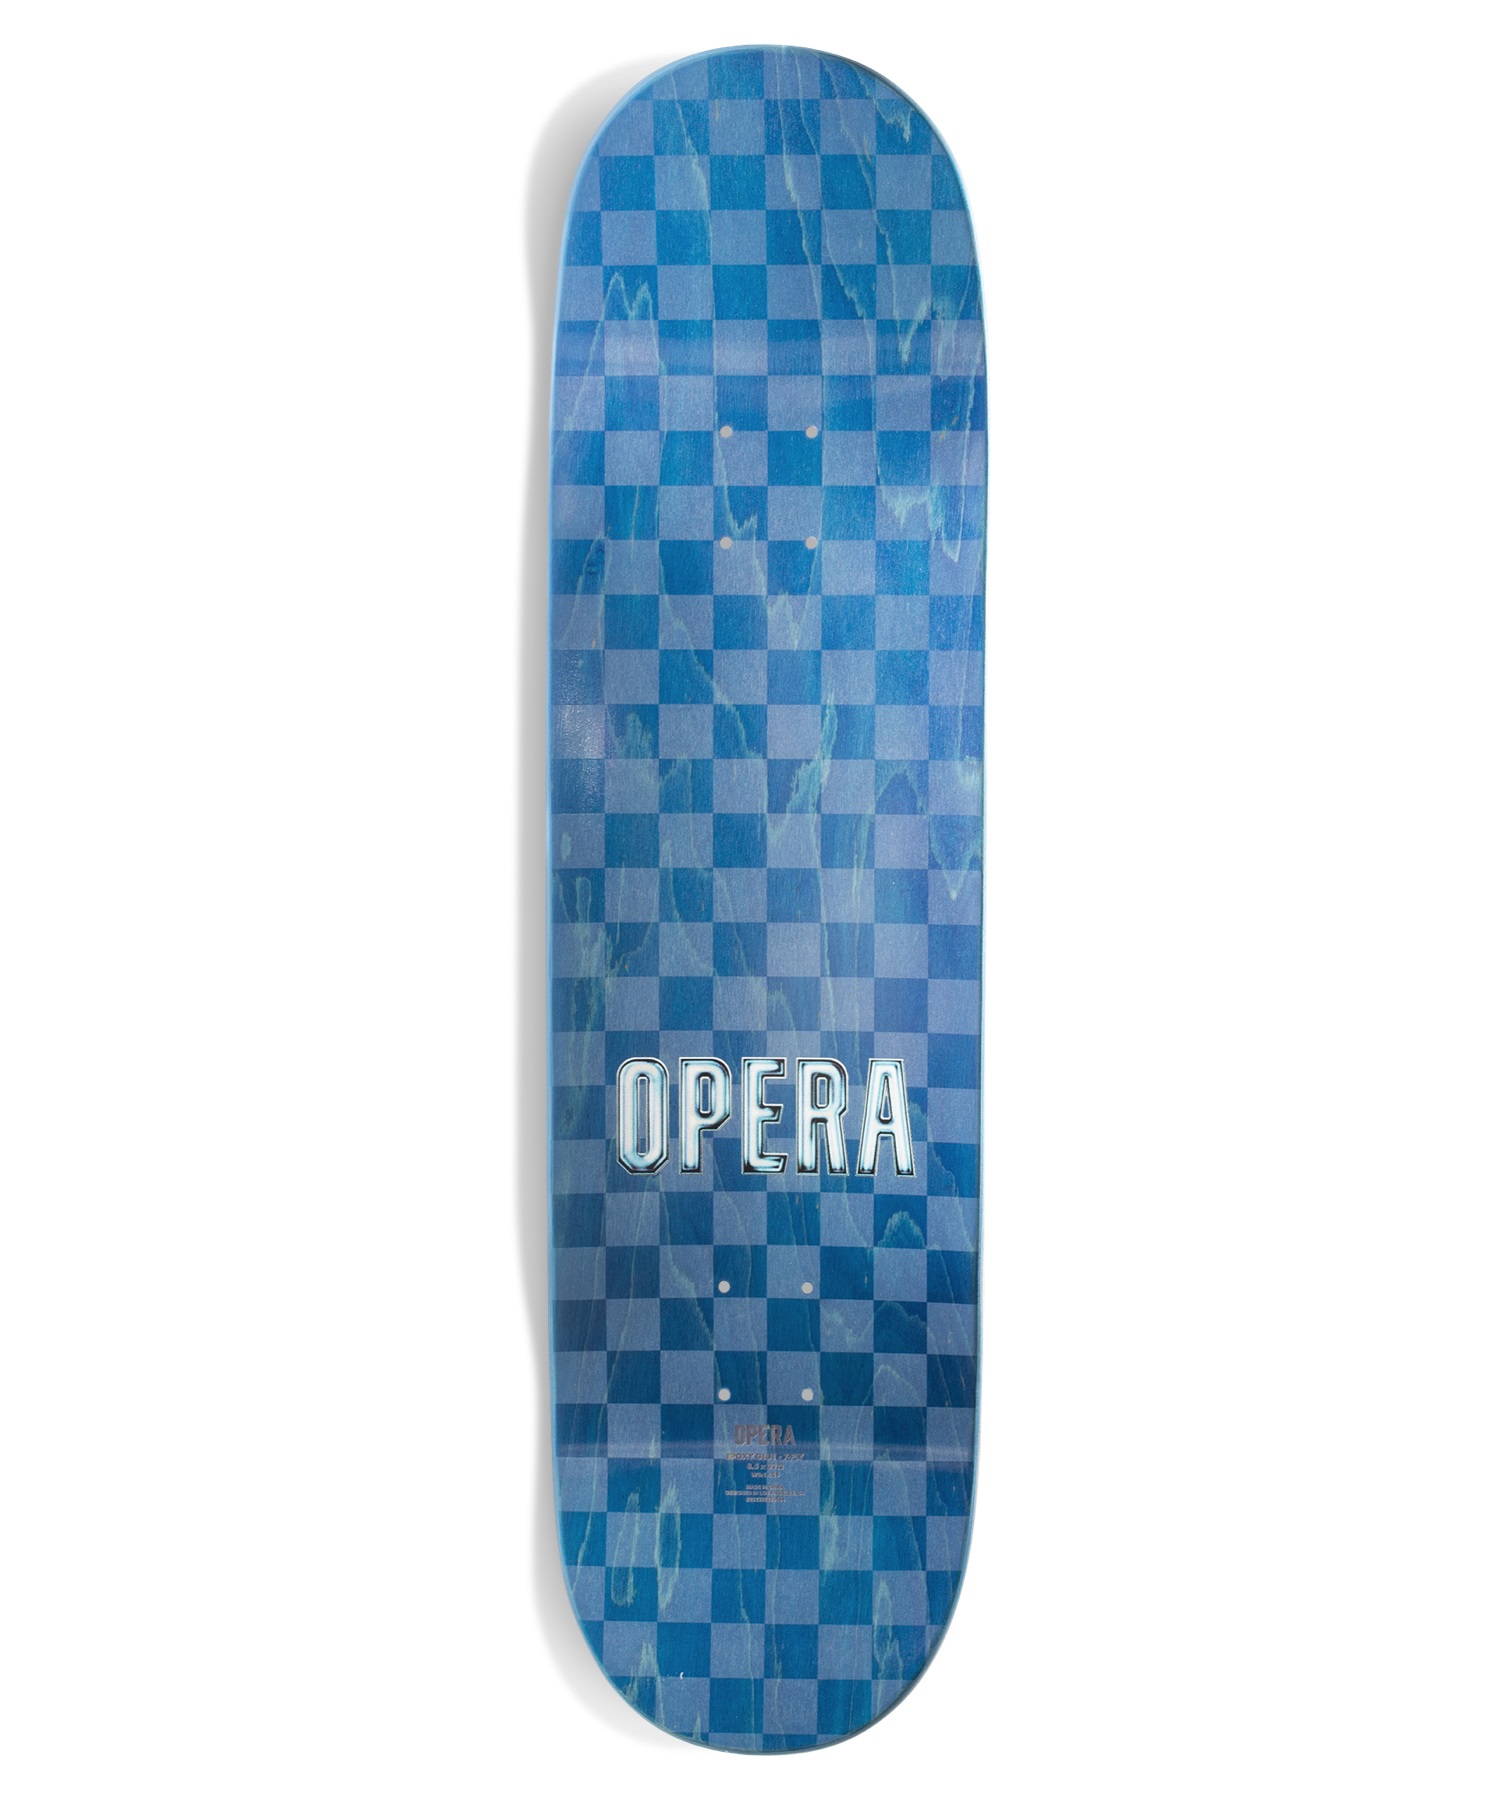 OPERA オペラ スケートボード デッキ MASK LOGO 8.25inch(ONECOLOR-8.25inch)